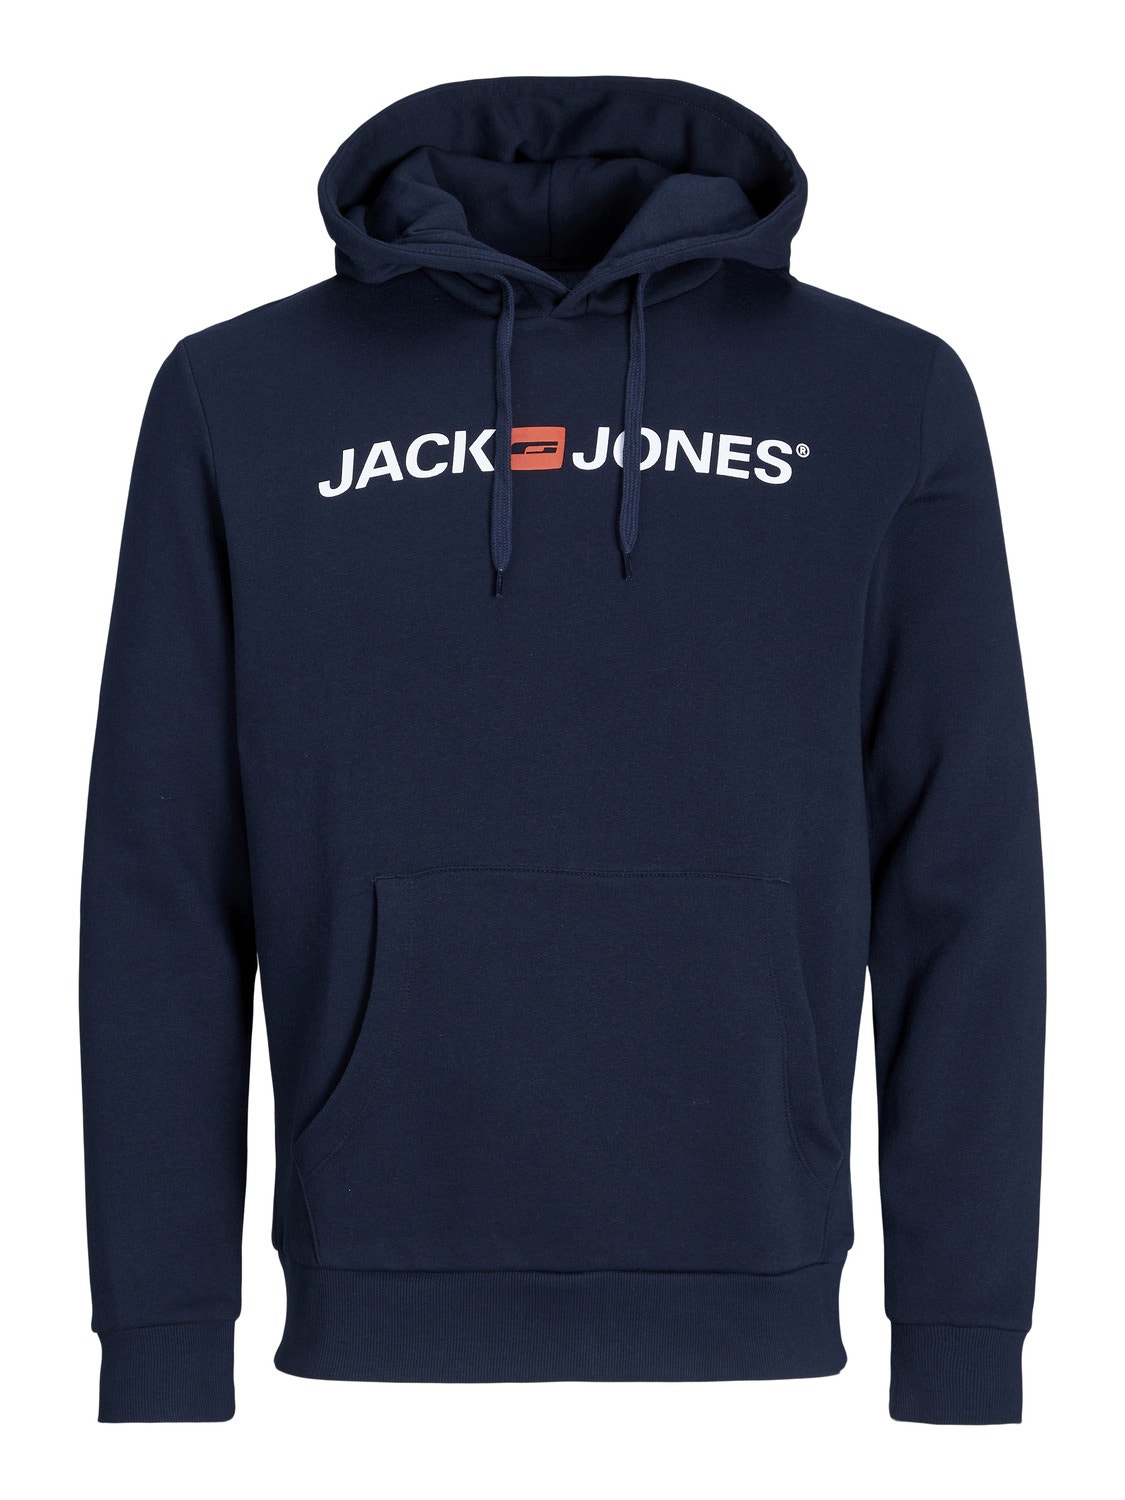 Jack & Jones Logo Kapuzenpullover -Navy Blazer - 12137054